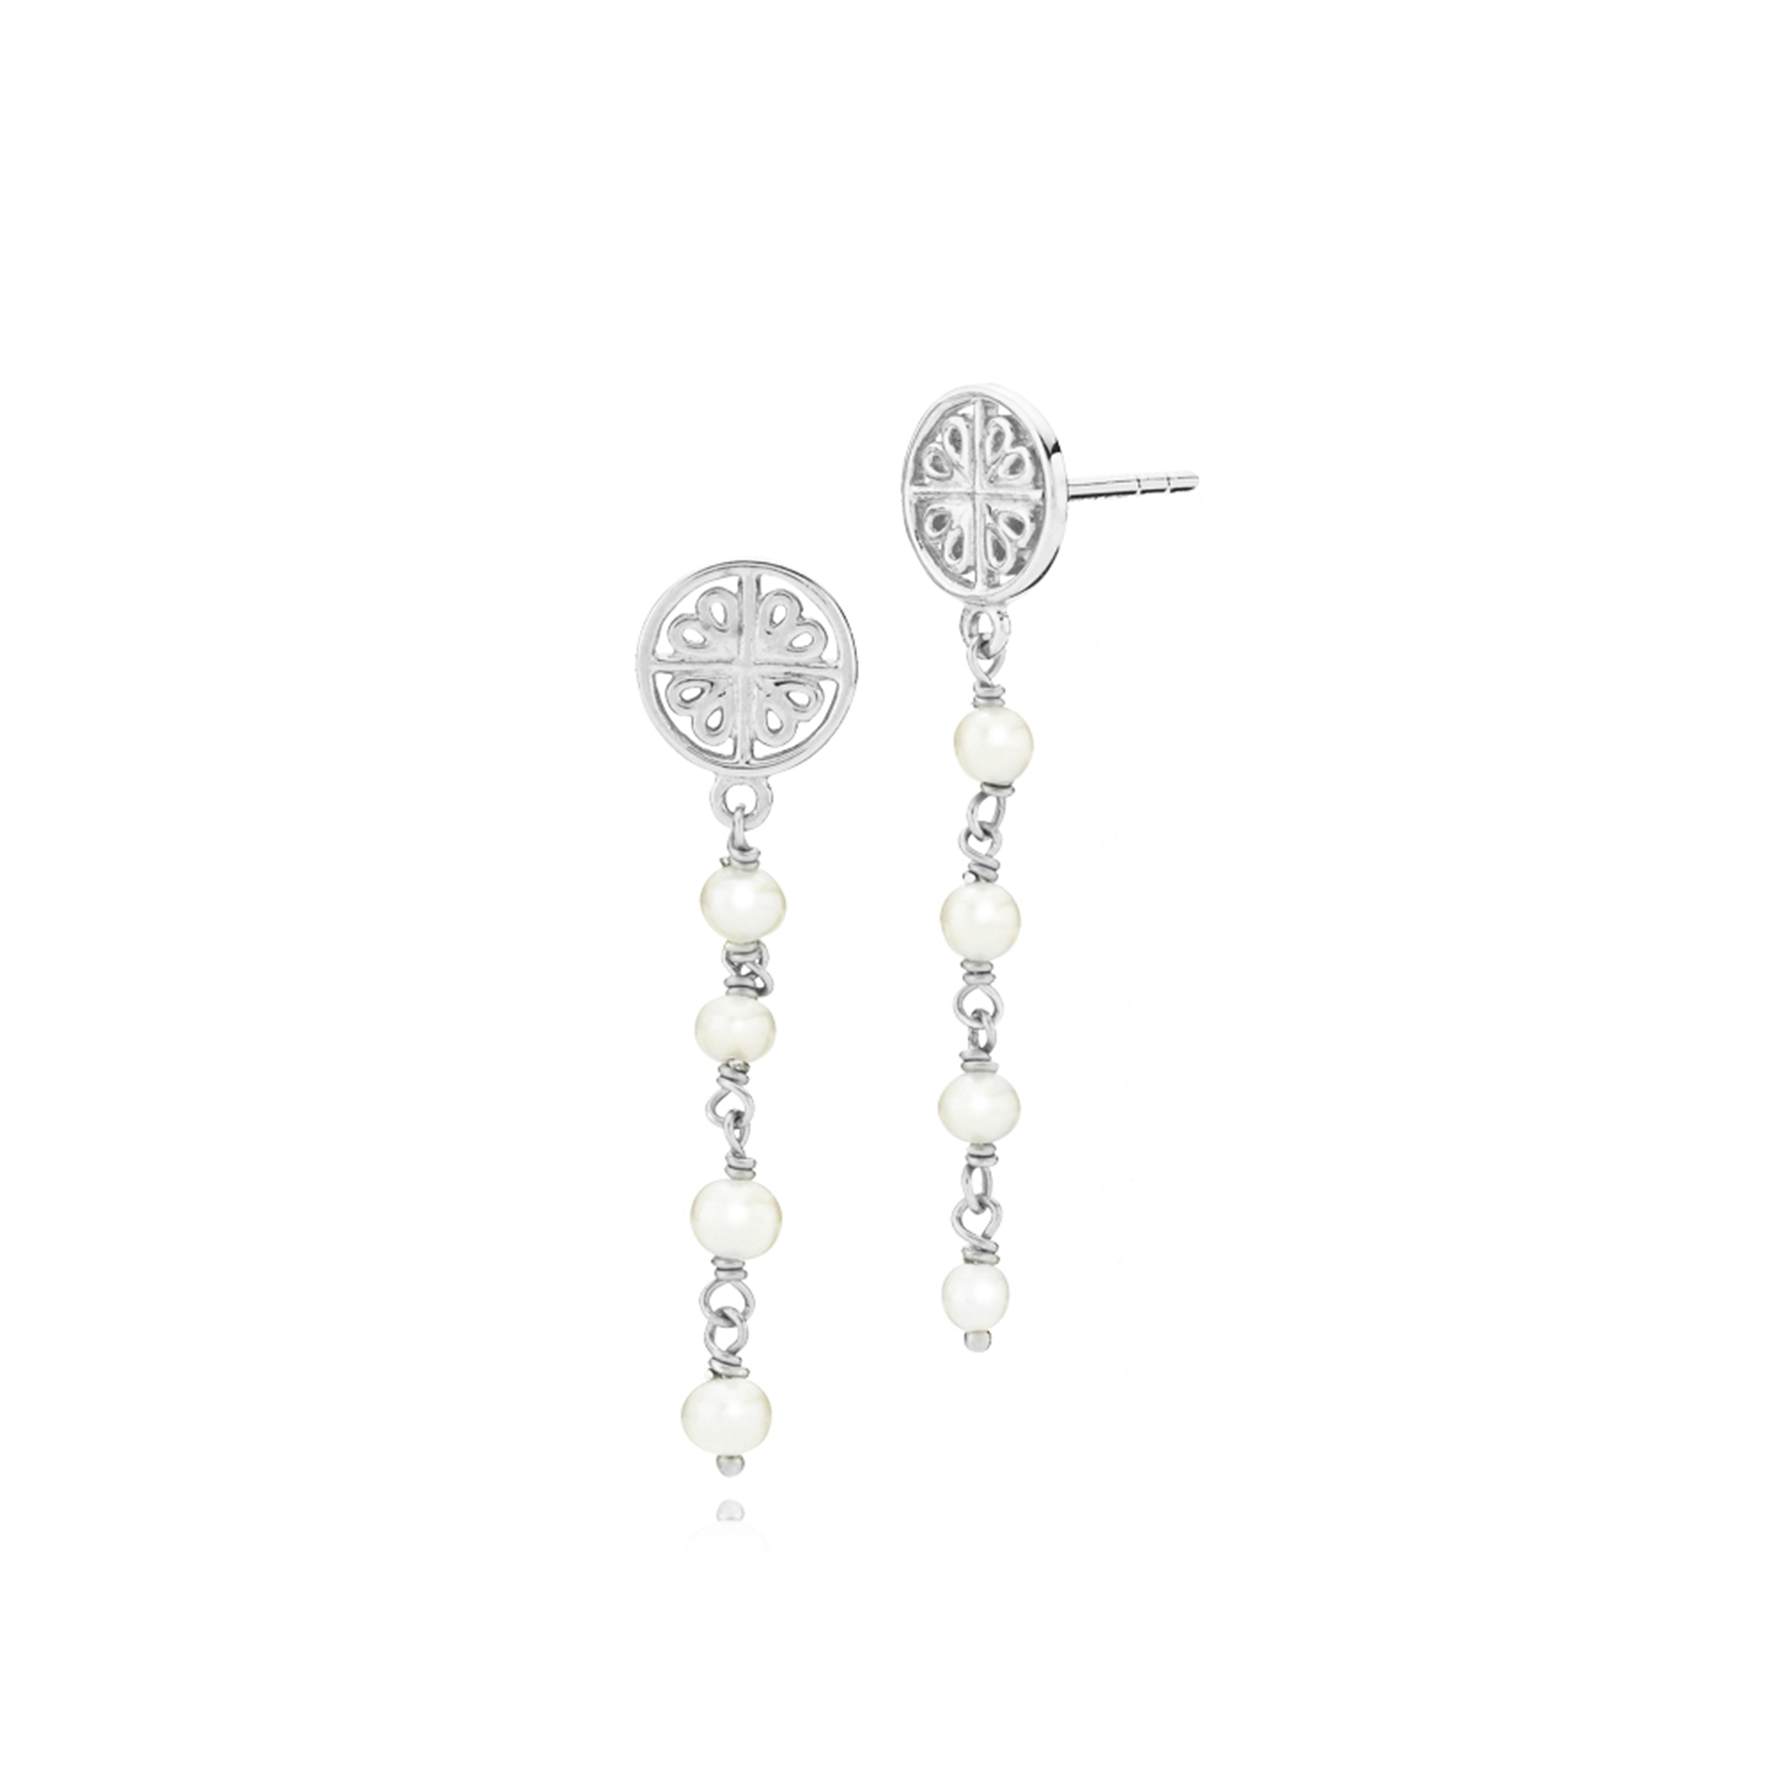 Balance Earrings With Pearl fra Sistie i Sølv Sterling 925|Freshwater Pearl